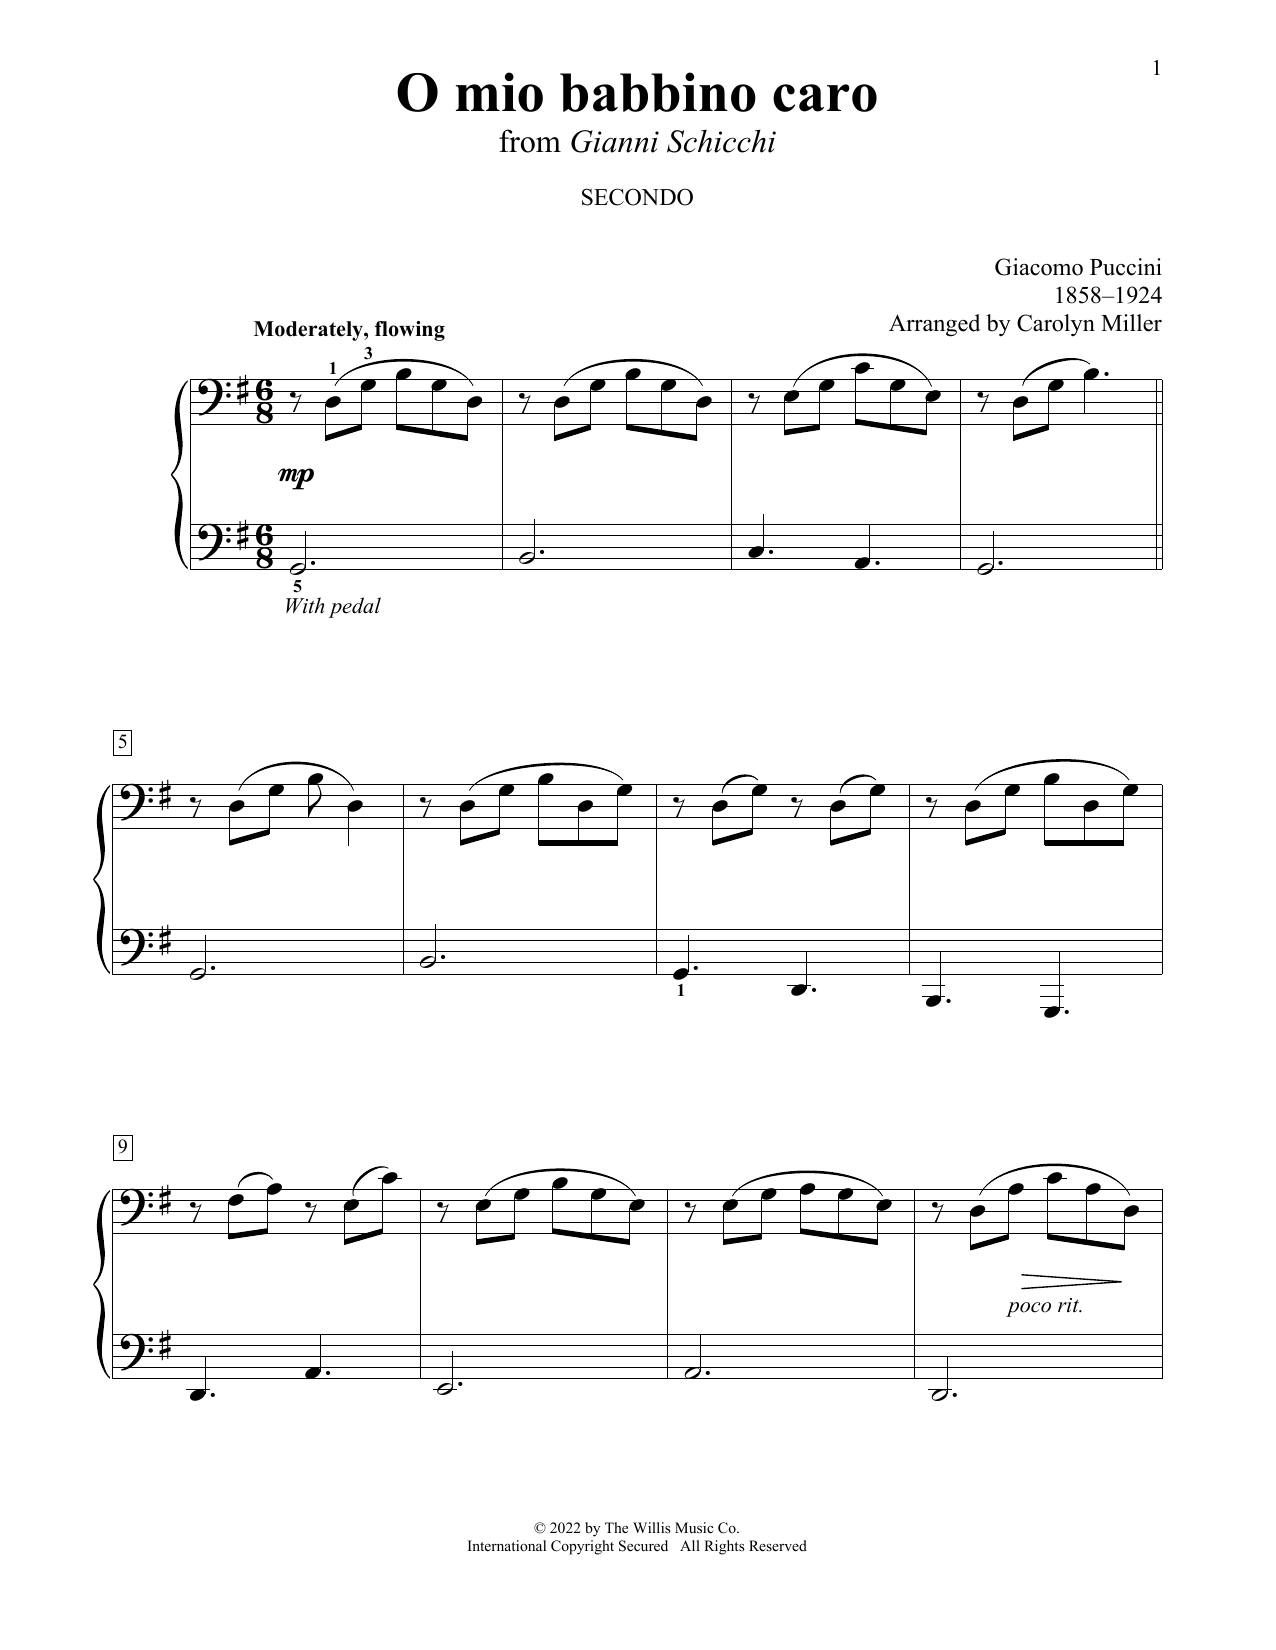 Giacomo Puccini O mio babbino caro (from Gianni Schicchi) (arr. Carolyn Miller) Sheet Music Notes & Chords for Piano Duet - Download or Print PDF